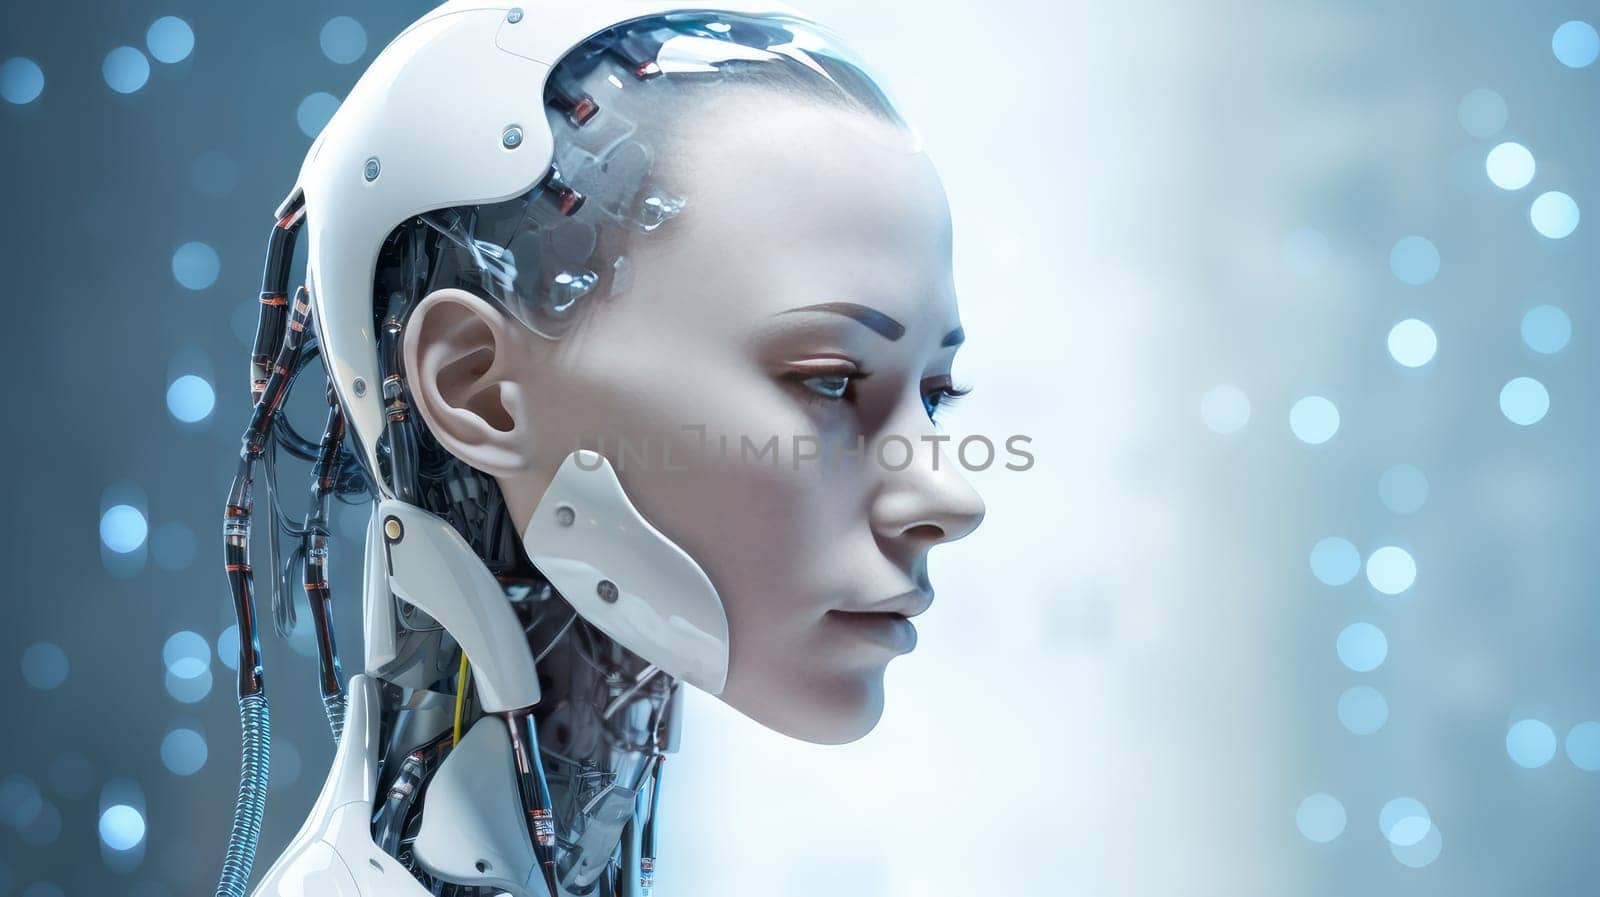 Portrait of a woman robot cyborg ai chatbot technology by Alla_Yurtayeva